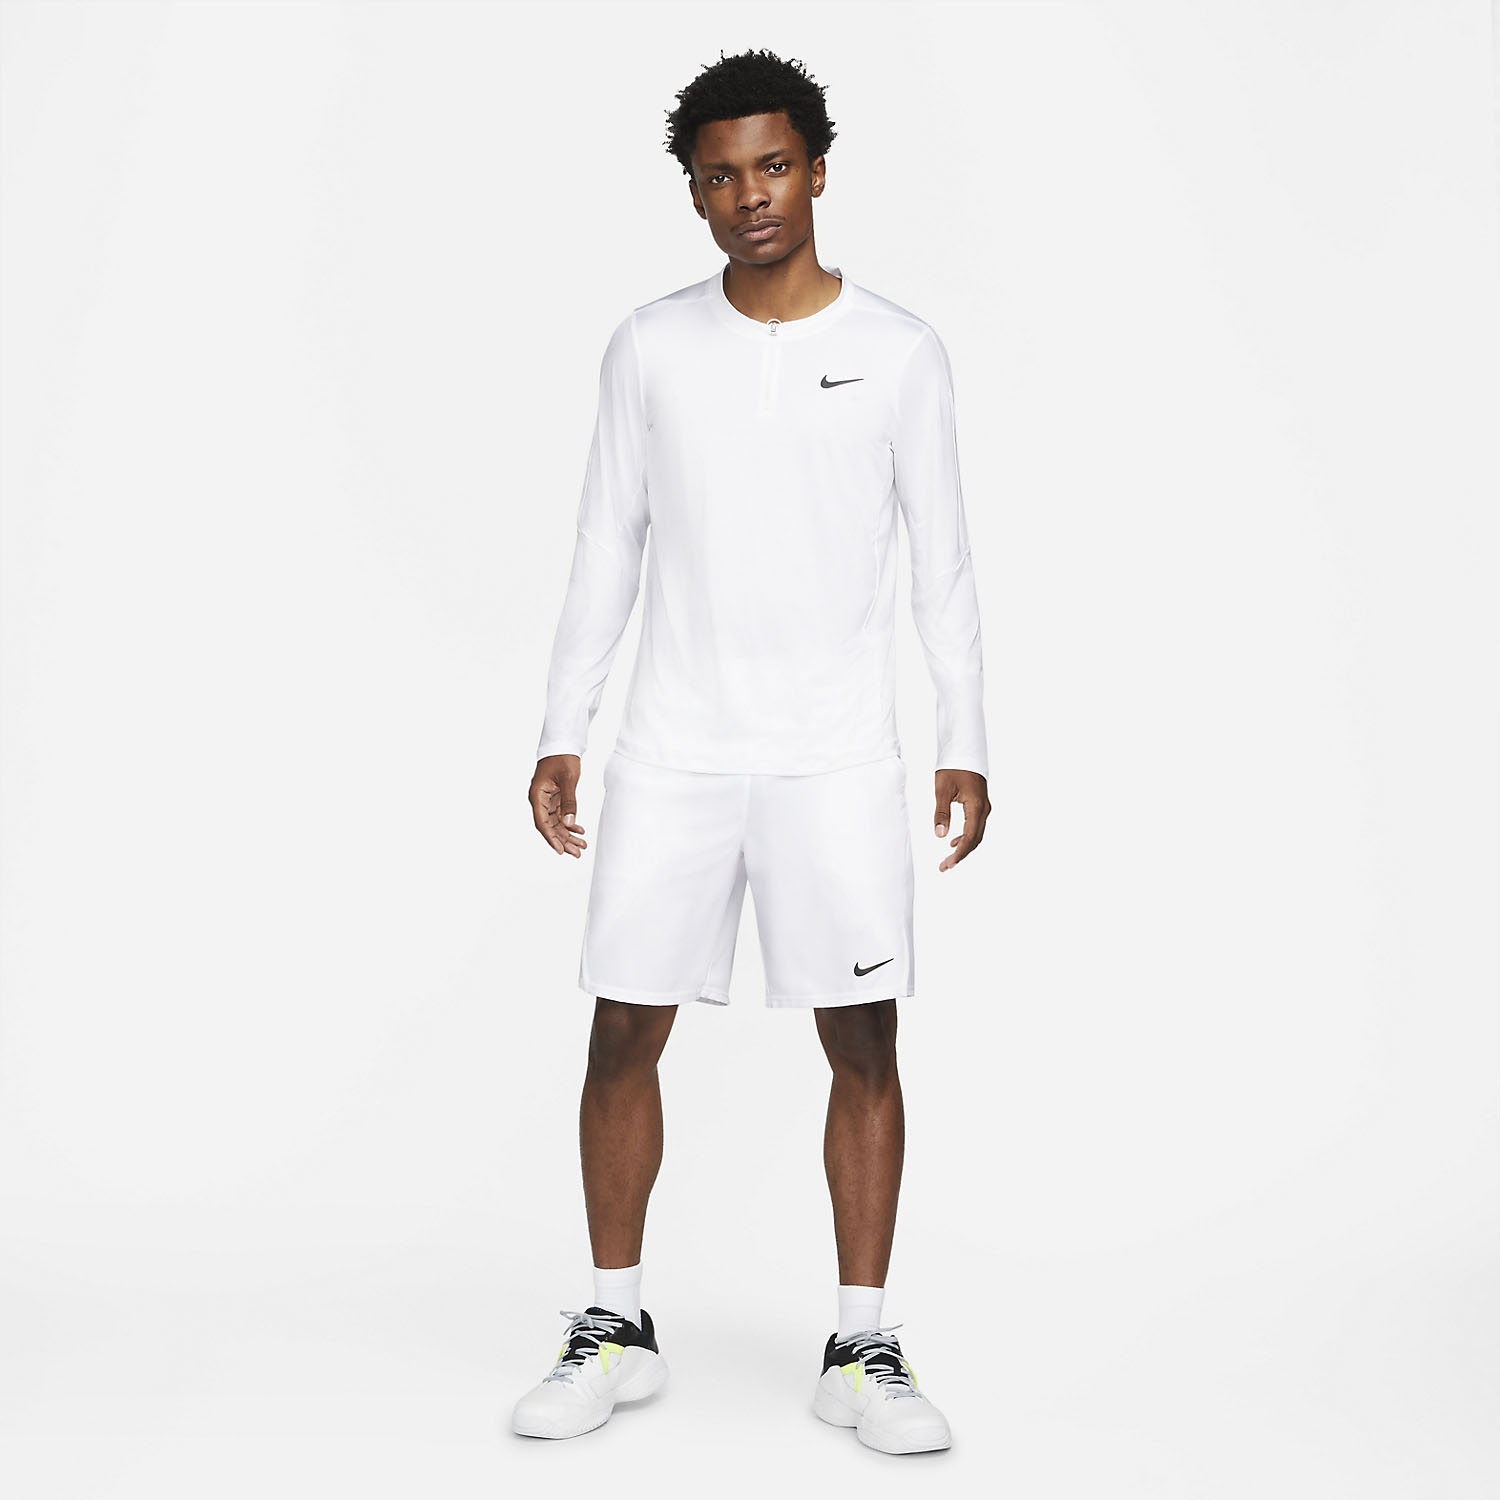 Nike Dri-FIT Advantage Men's Tennis Shirt - White/Black